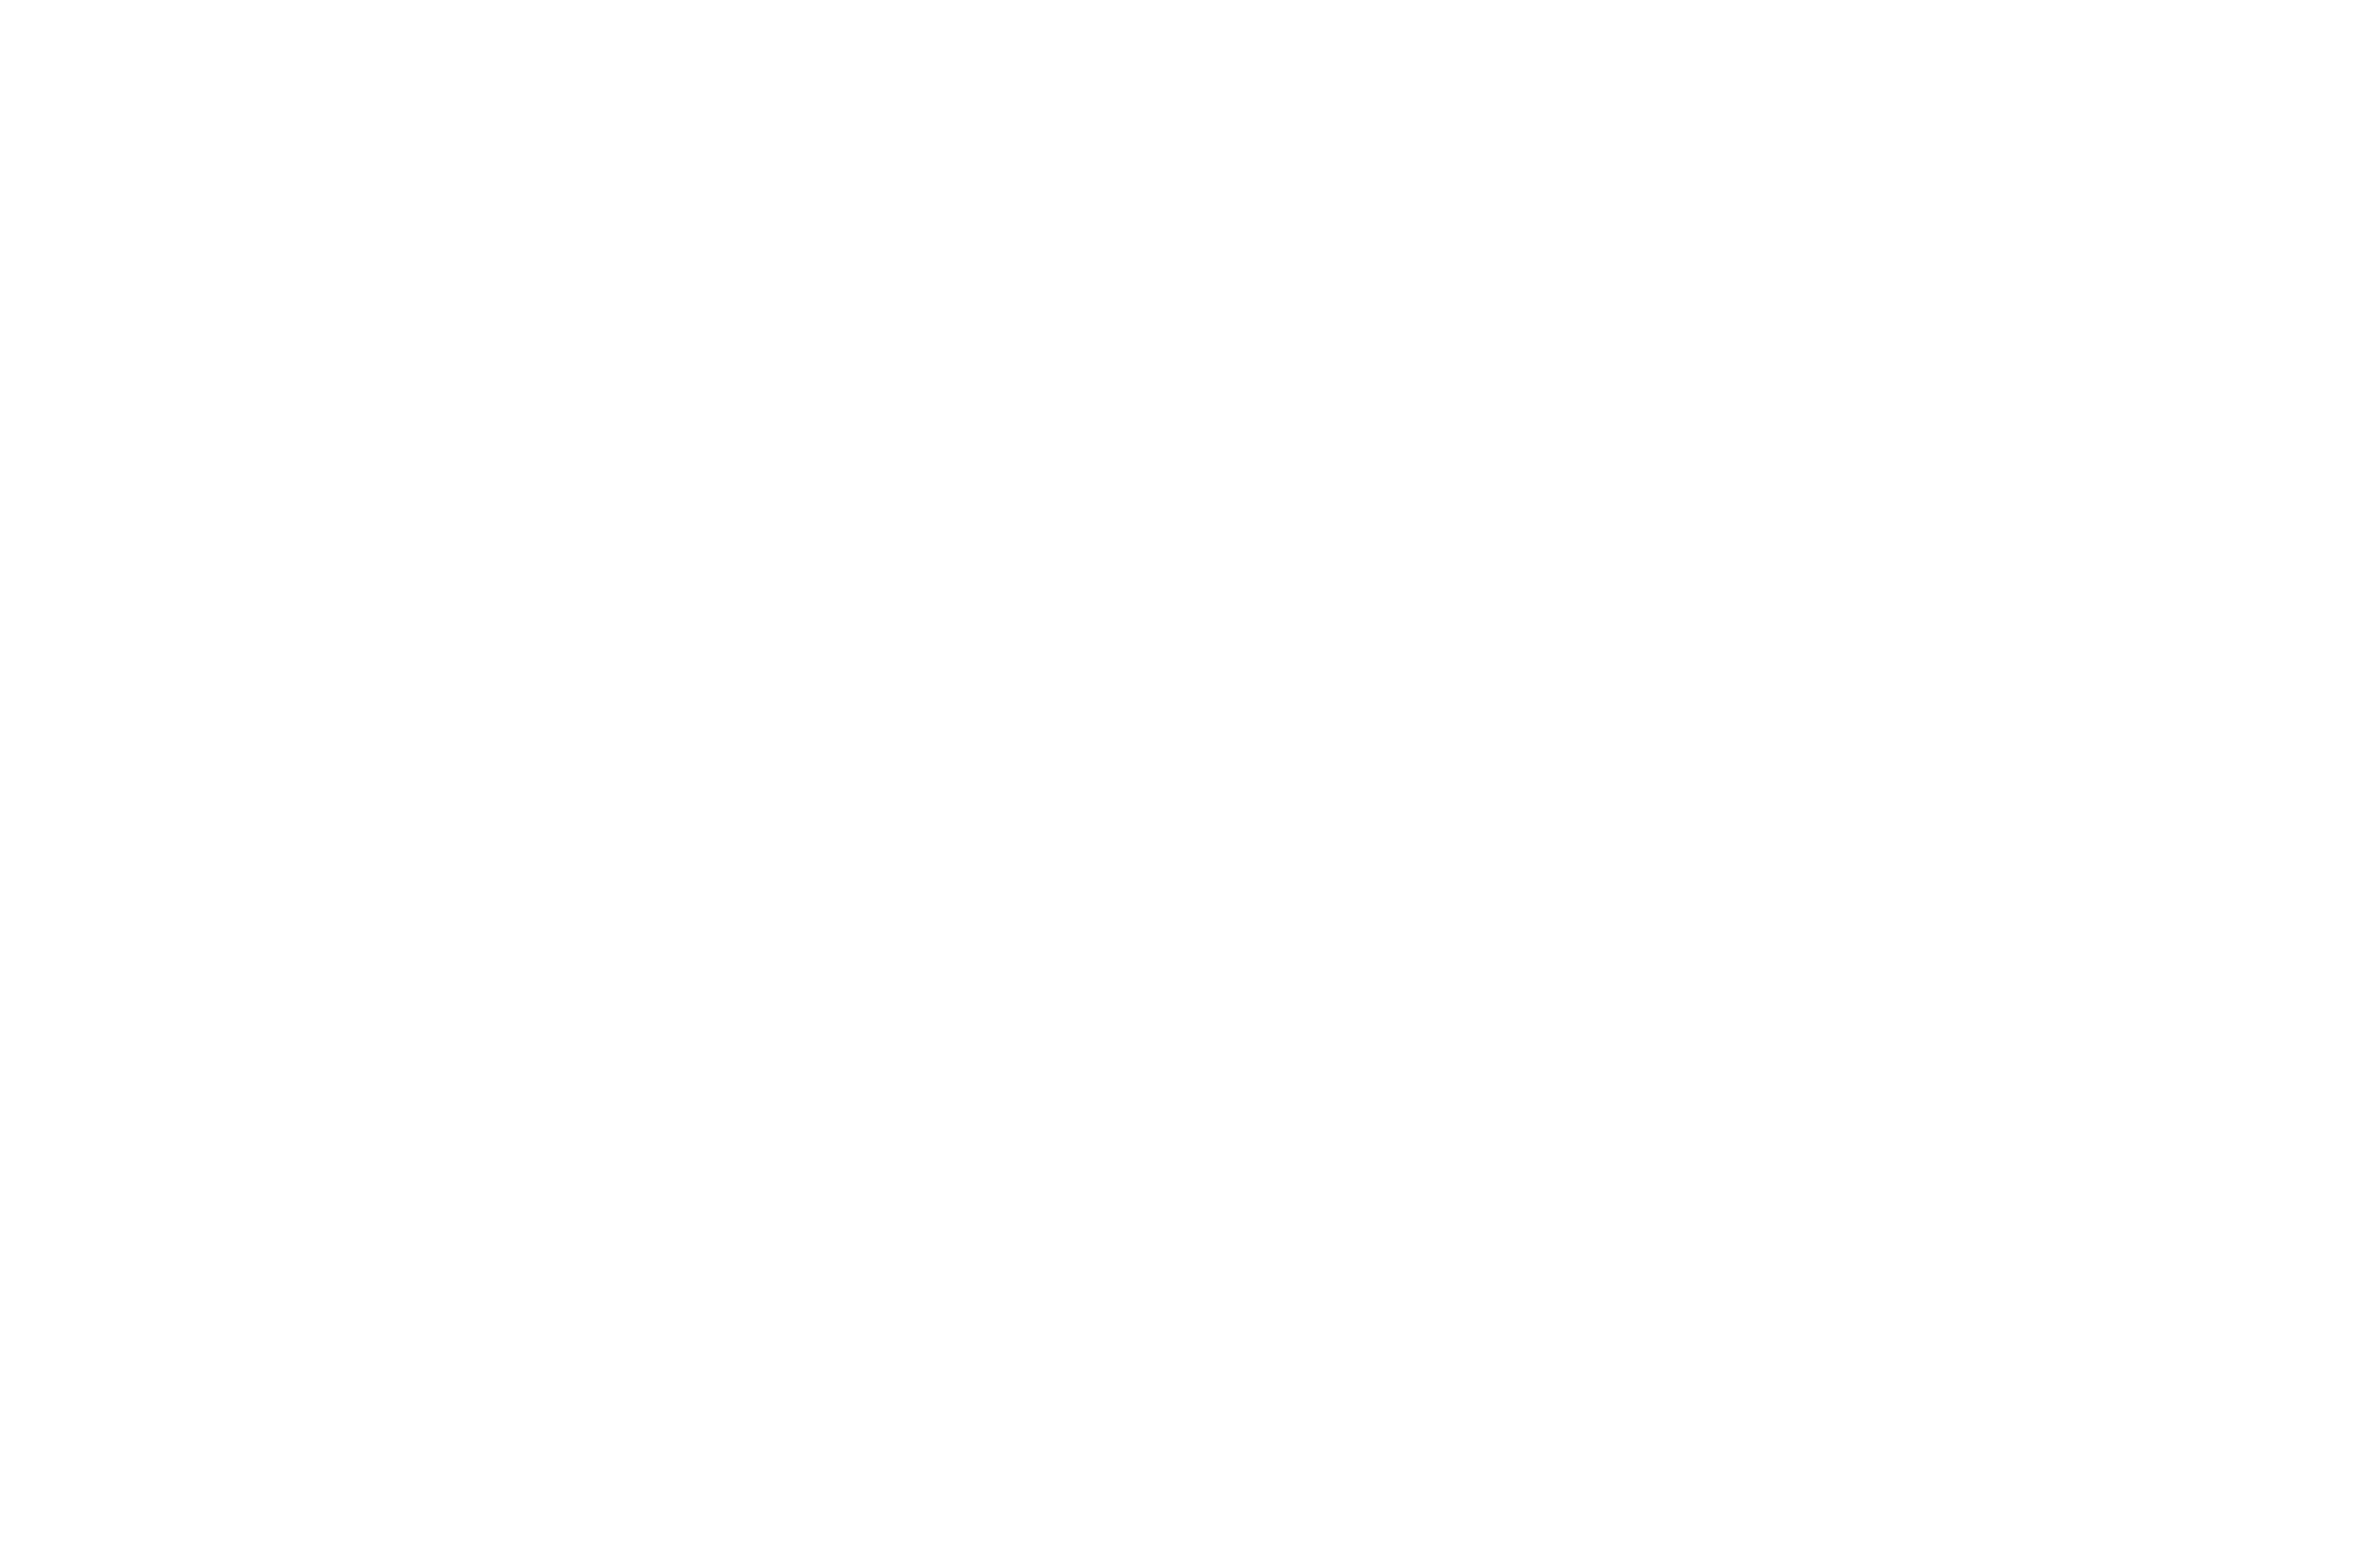 WINNERBESTSTUDENTFILM-BucharestShortCutCineFest-January2017.png